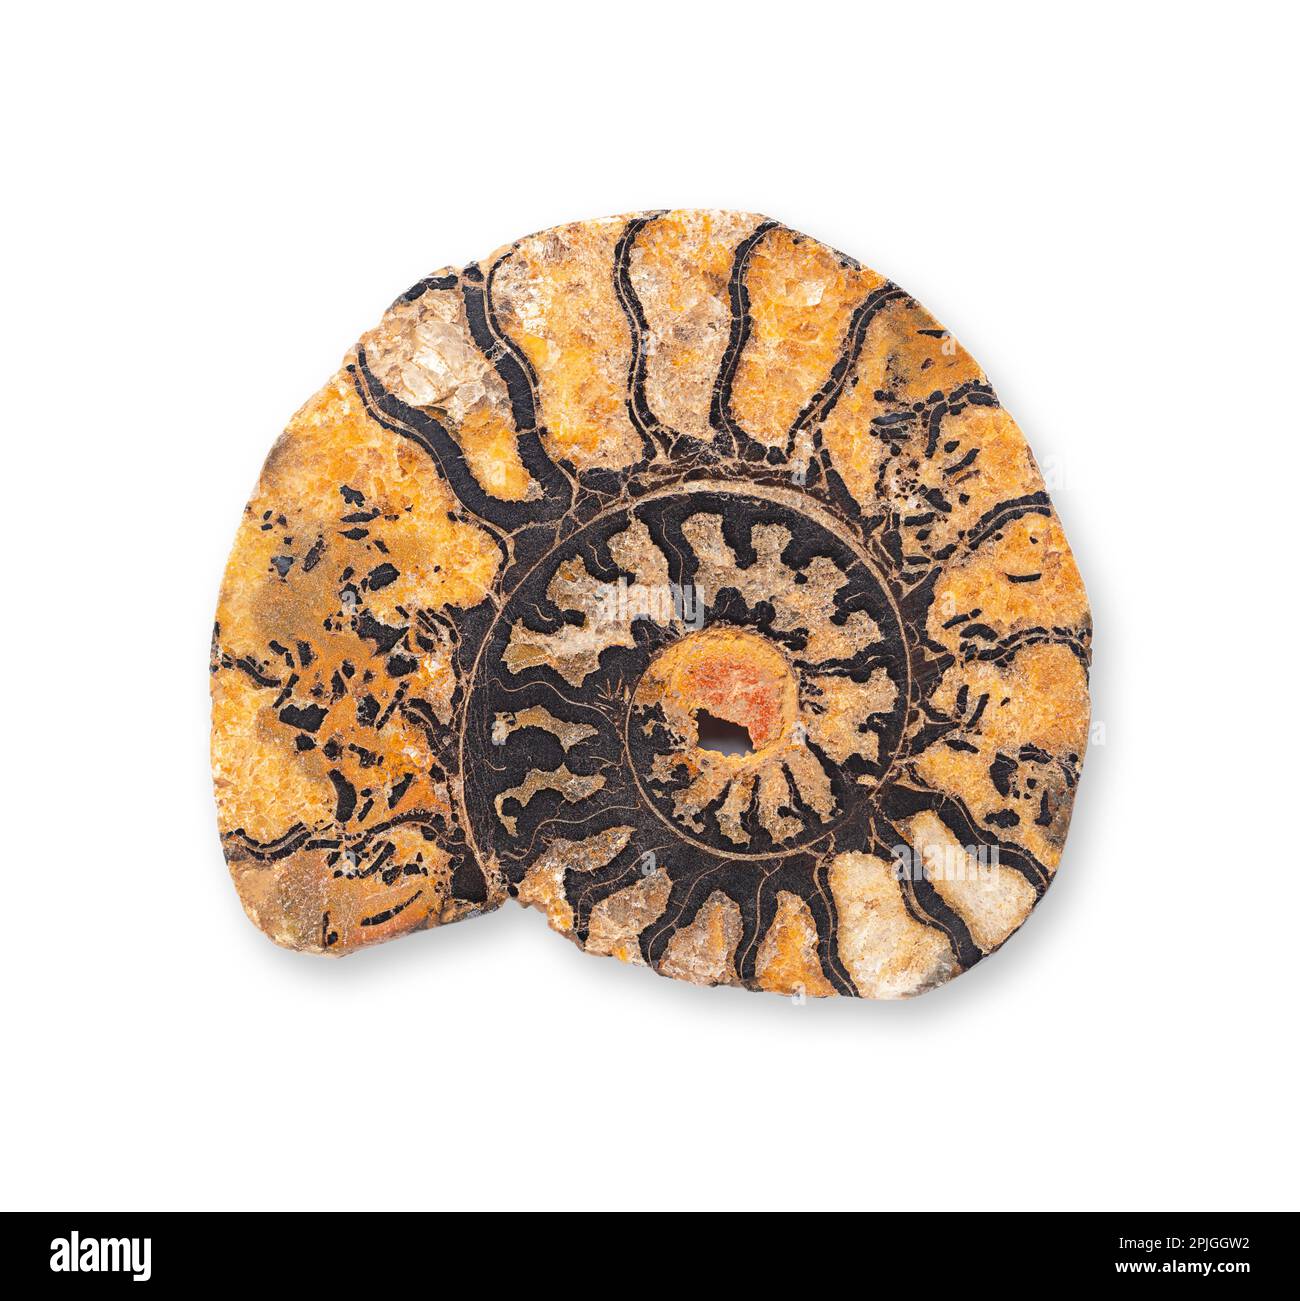 Ammonite longitudinal section. Sagittal cut through a spiral shaped fossil shell of an extinct marine mollusc animal, revealing the internal chambers. Stock Photo